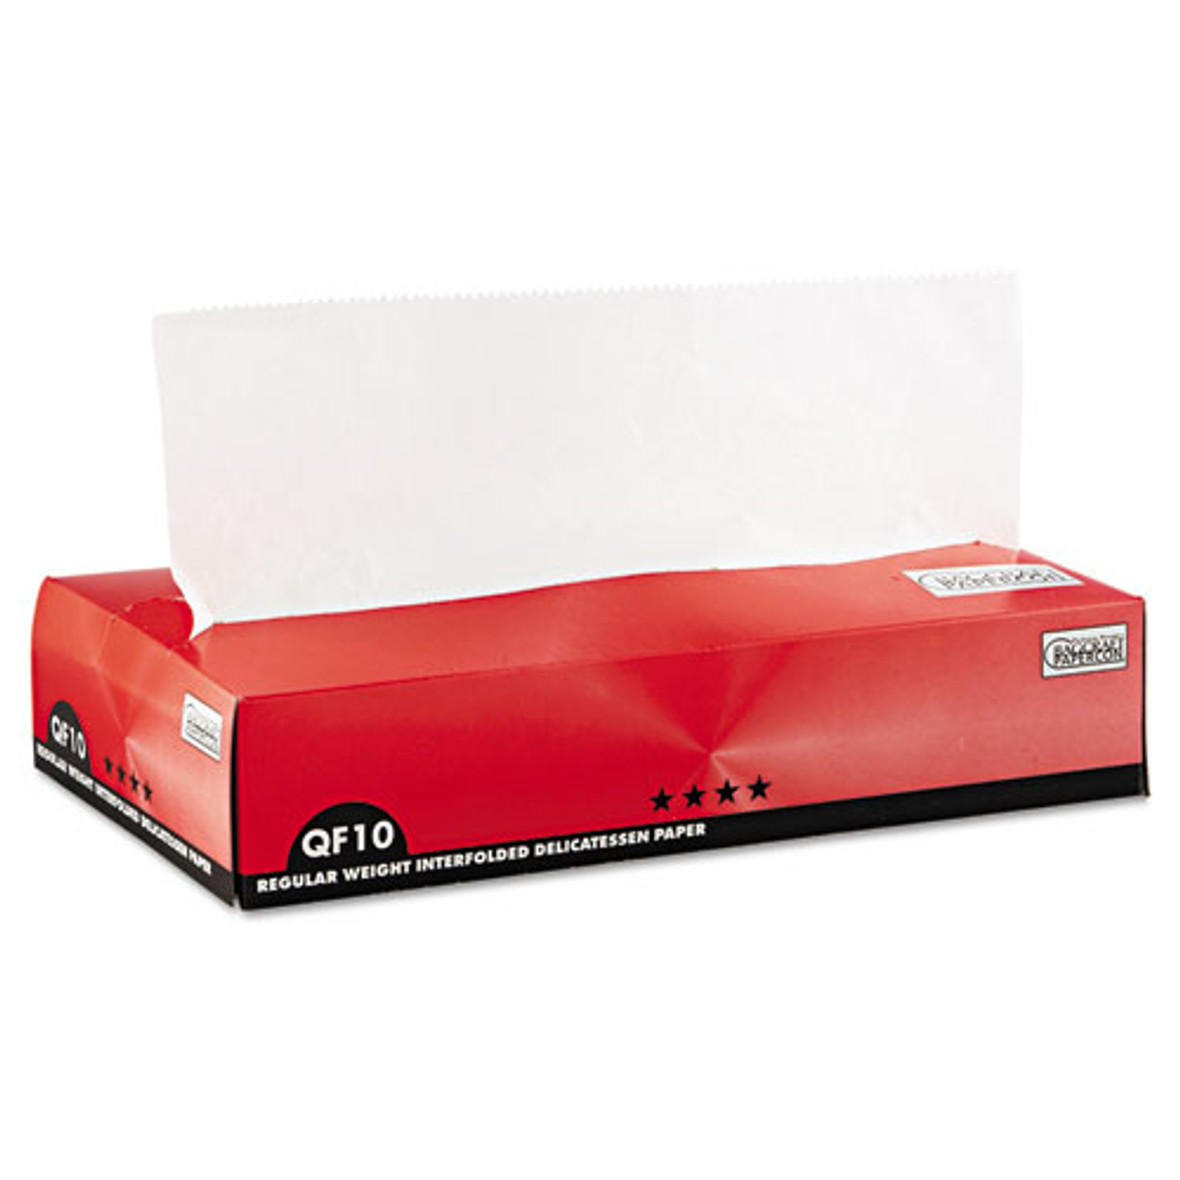 EcoCraft Qf10 Interfolded Dry Wax Deli Paper, 10 x 10.25, White, 500/Box, 12 Boxes/Carton